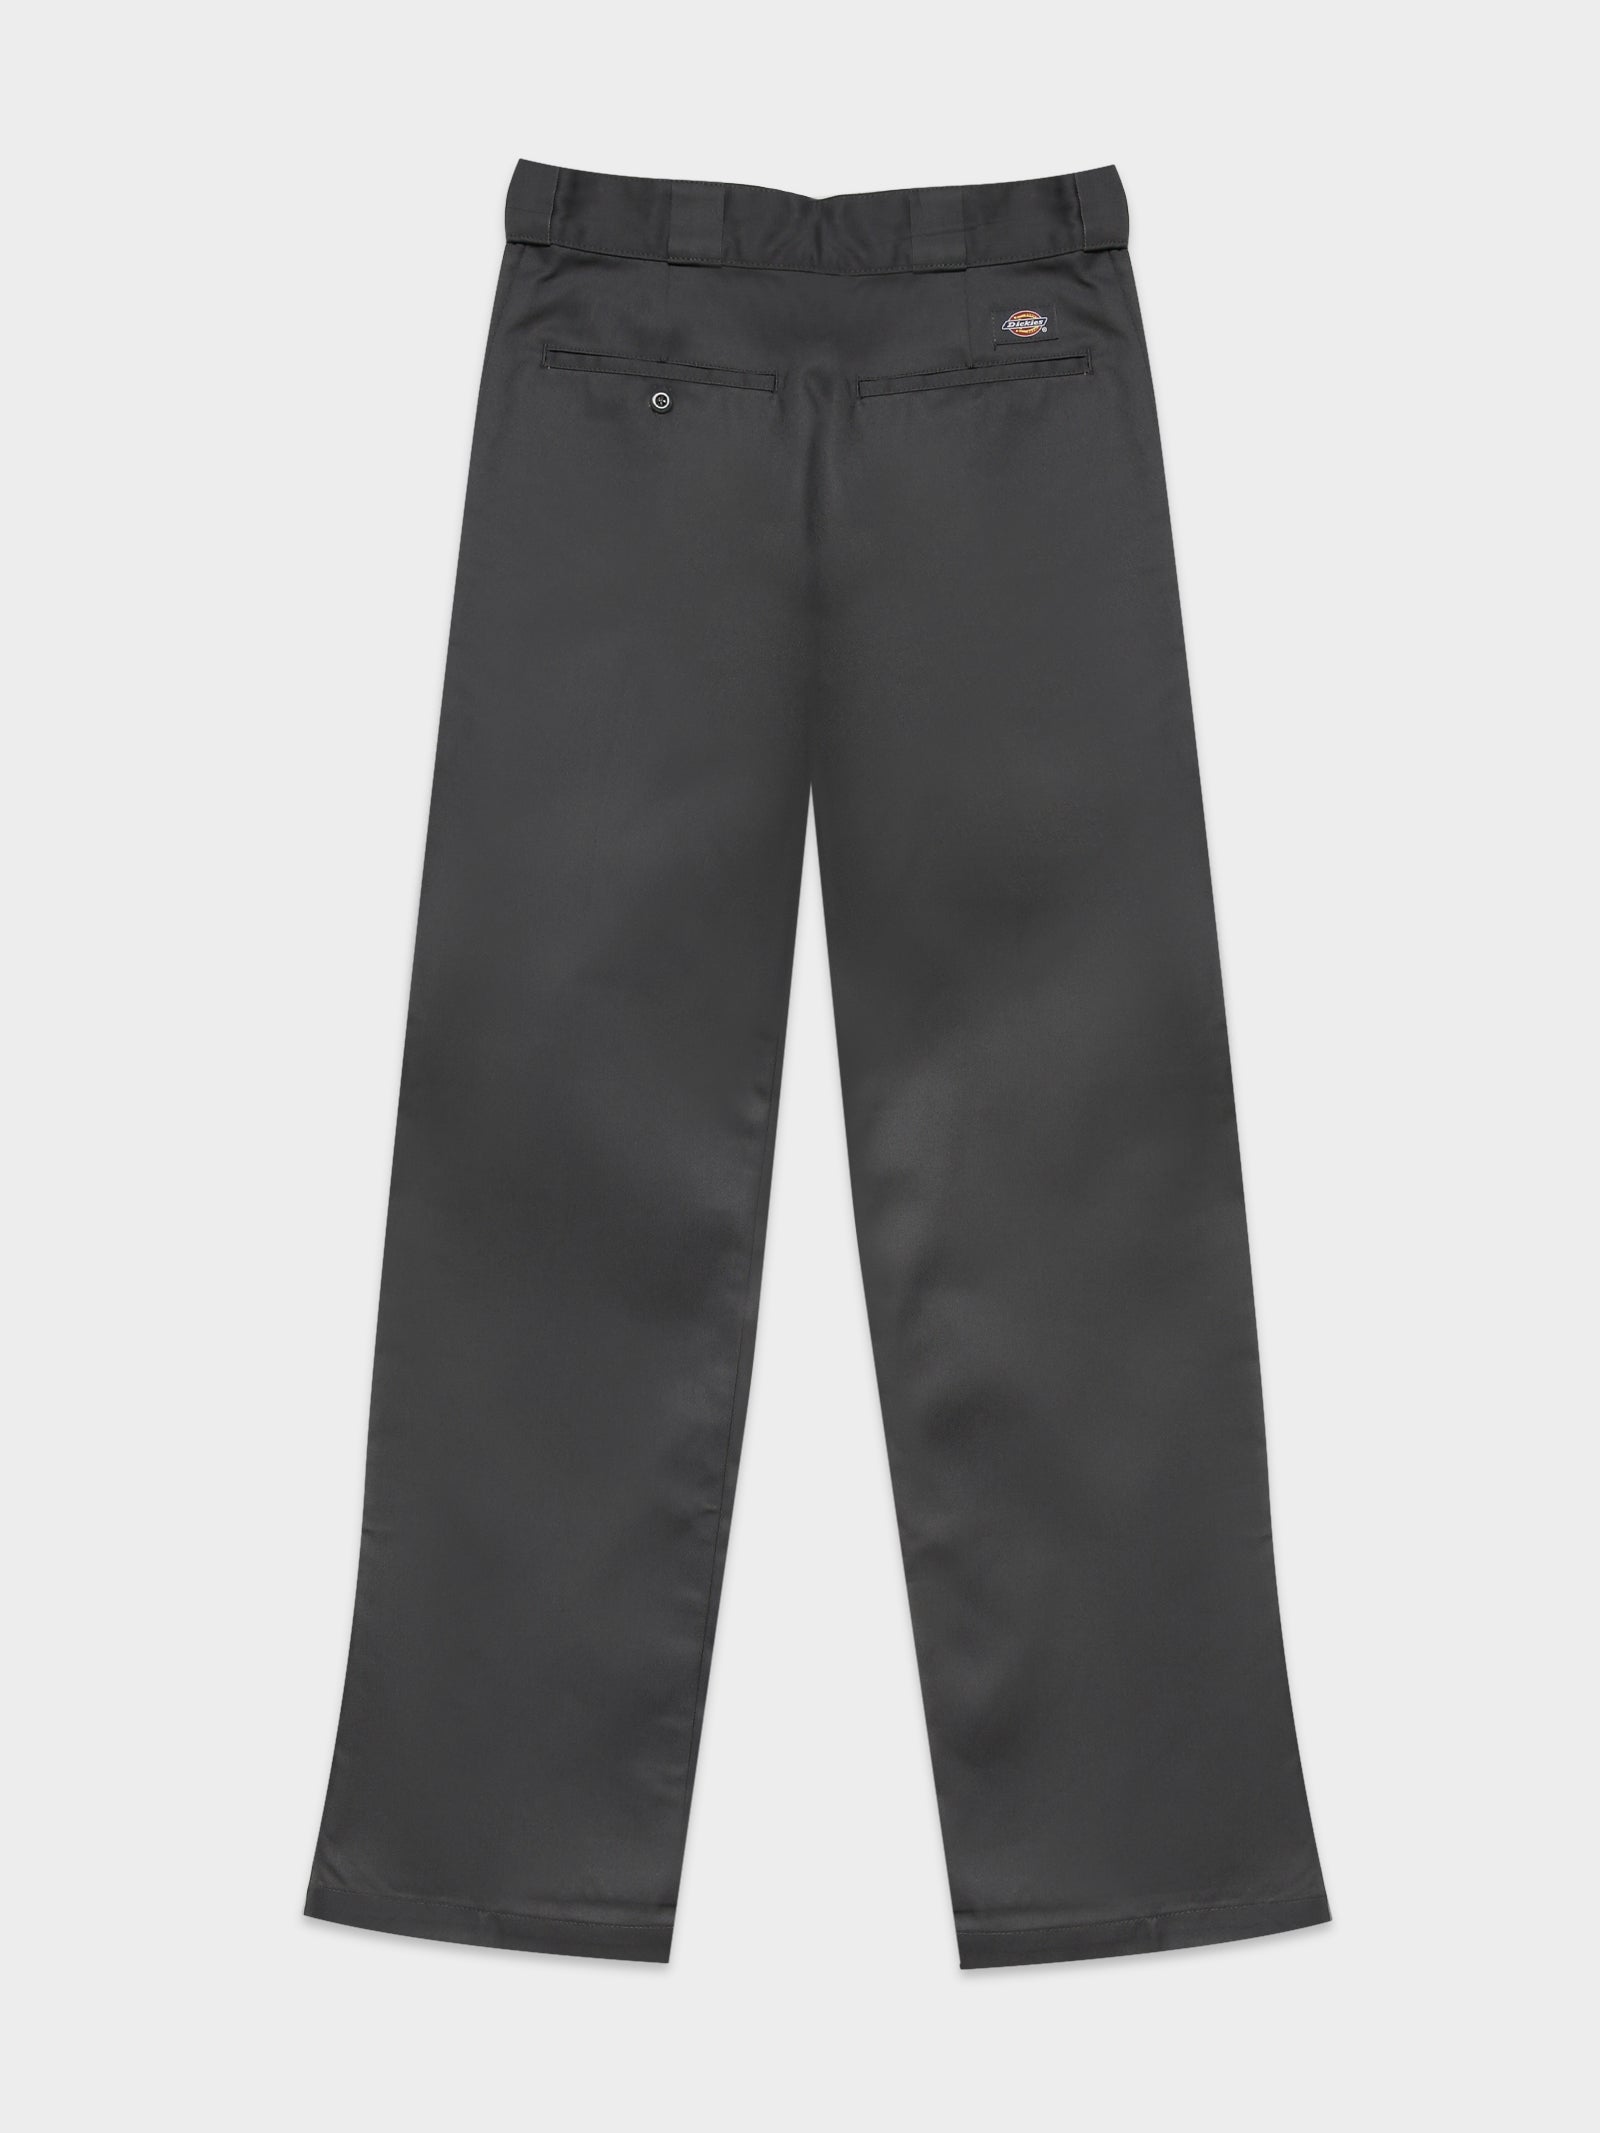 Dickies Men's Skinny Fit Khaki Pants – Beau's School Uniforms